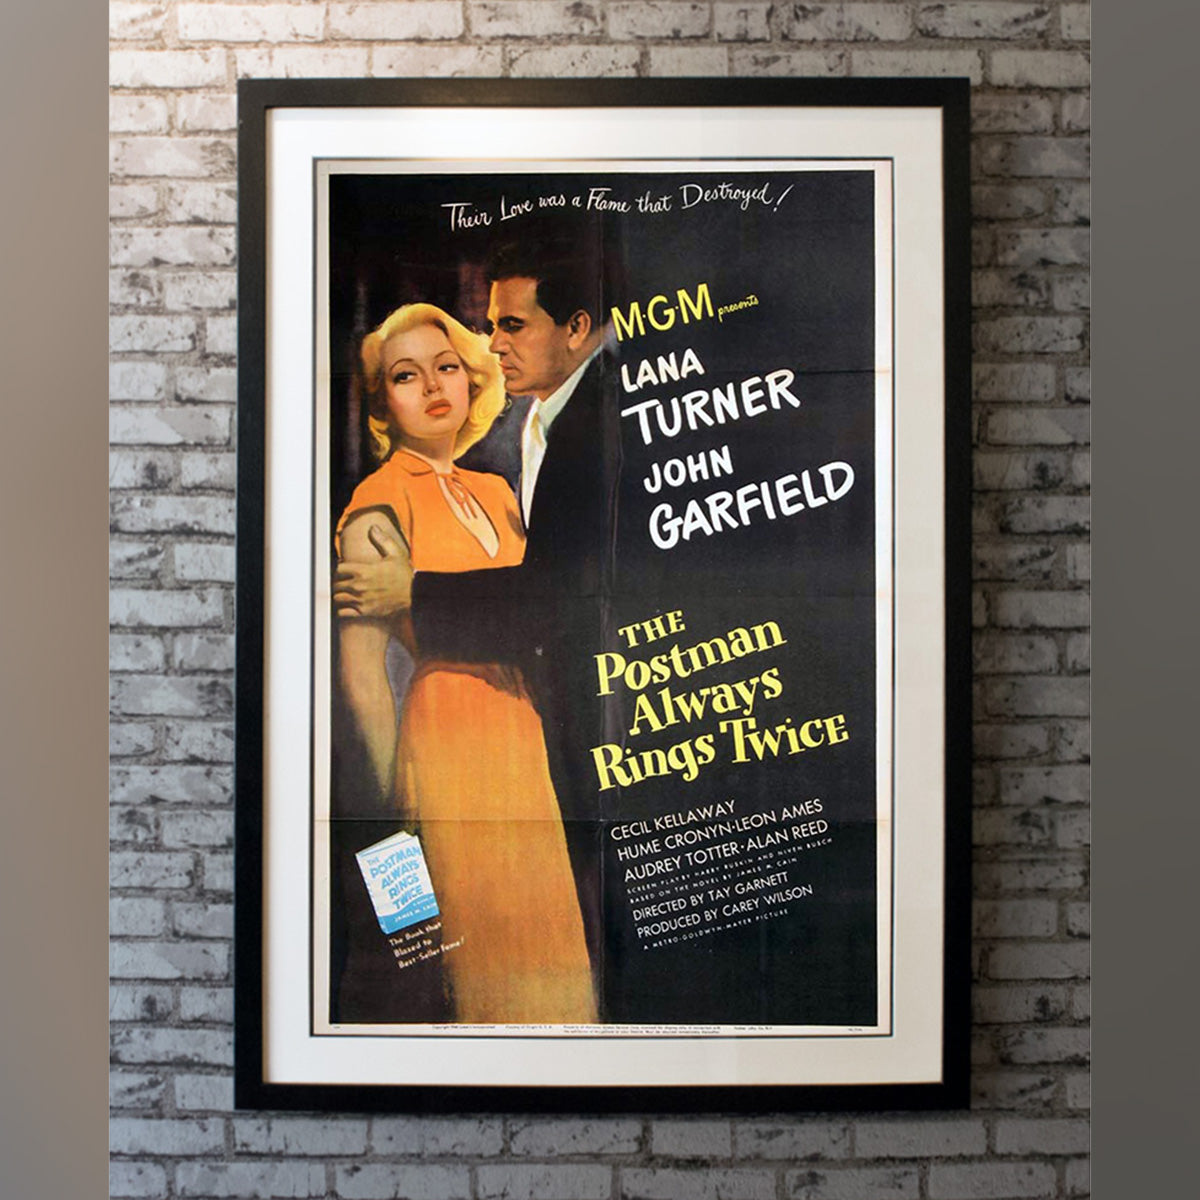 Original Movie Poster of Postman Always Rings Twice, The (1946)